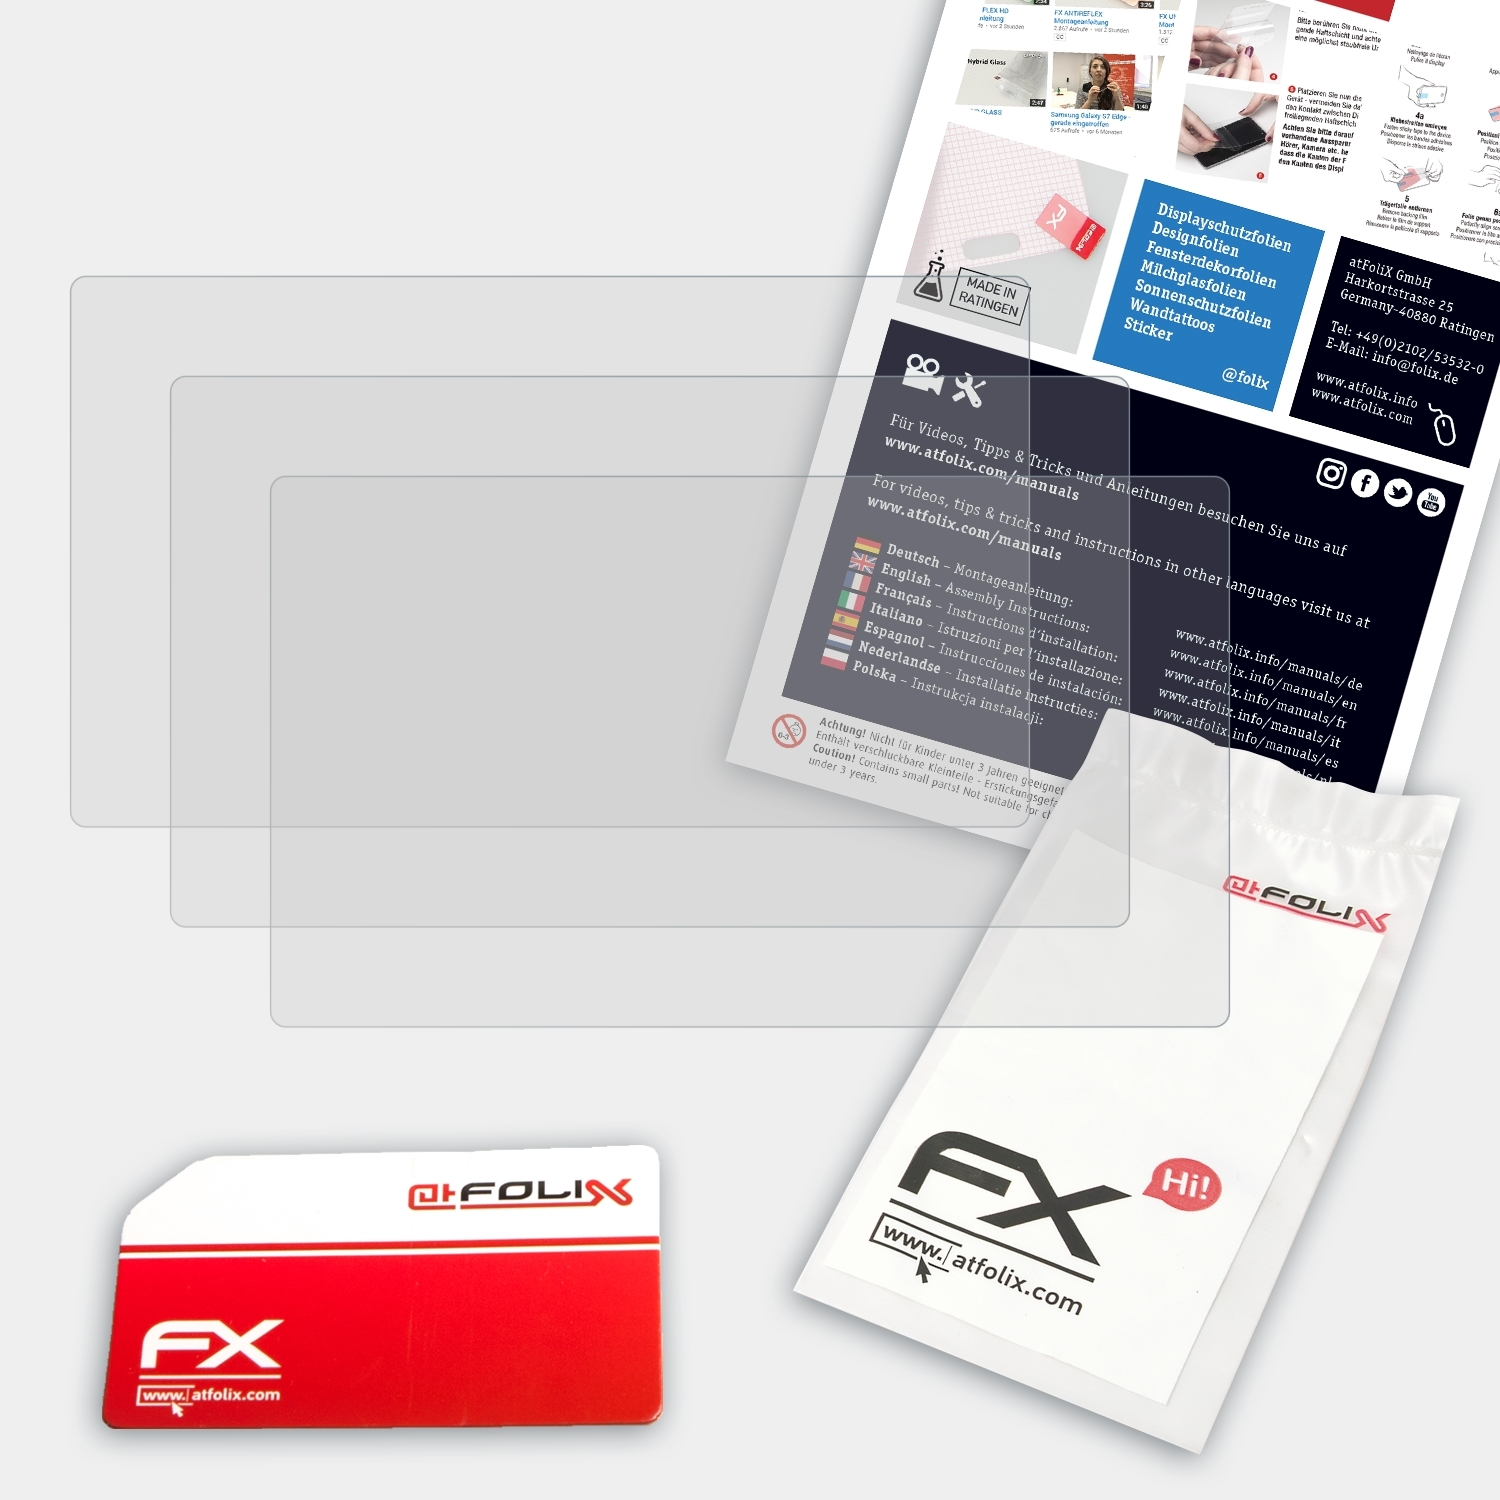 ATFOLIX 3x HC-VXF11) Panasonic FX-Antireflex Displayschutz(für